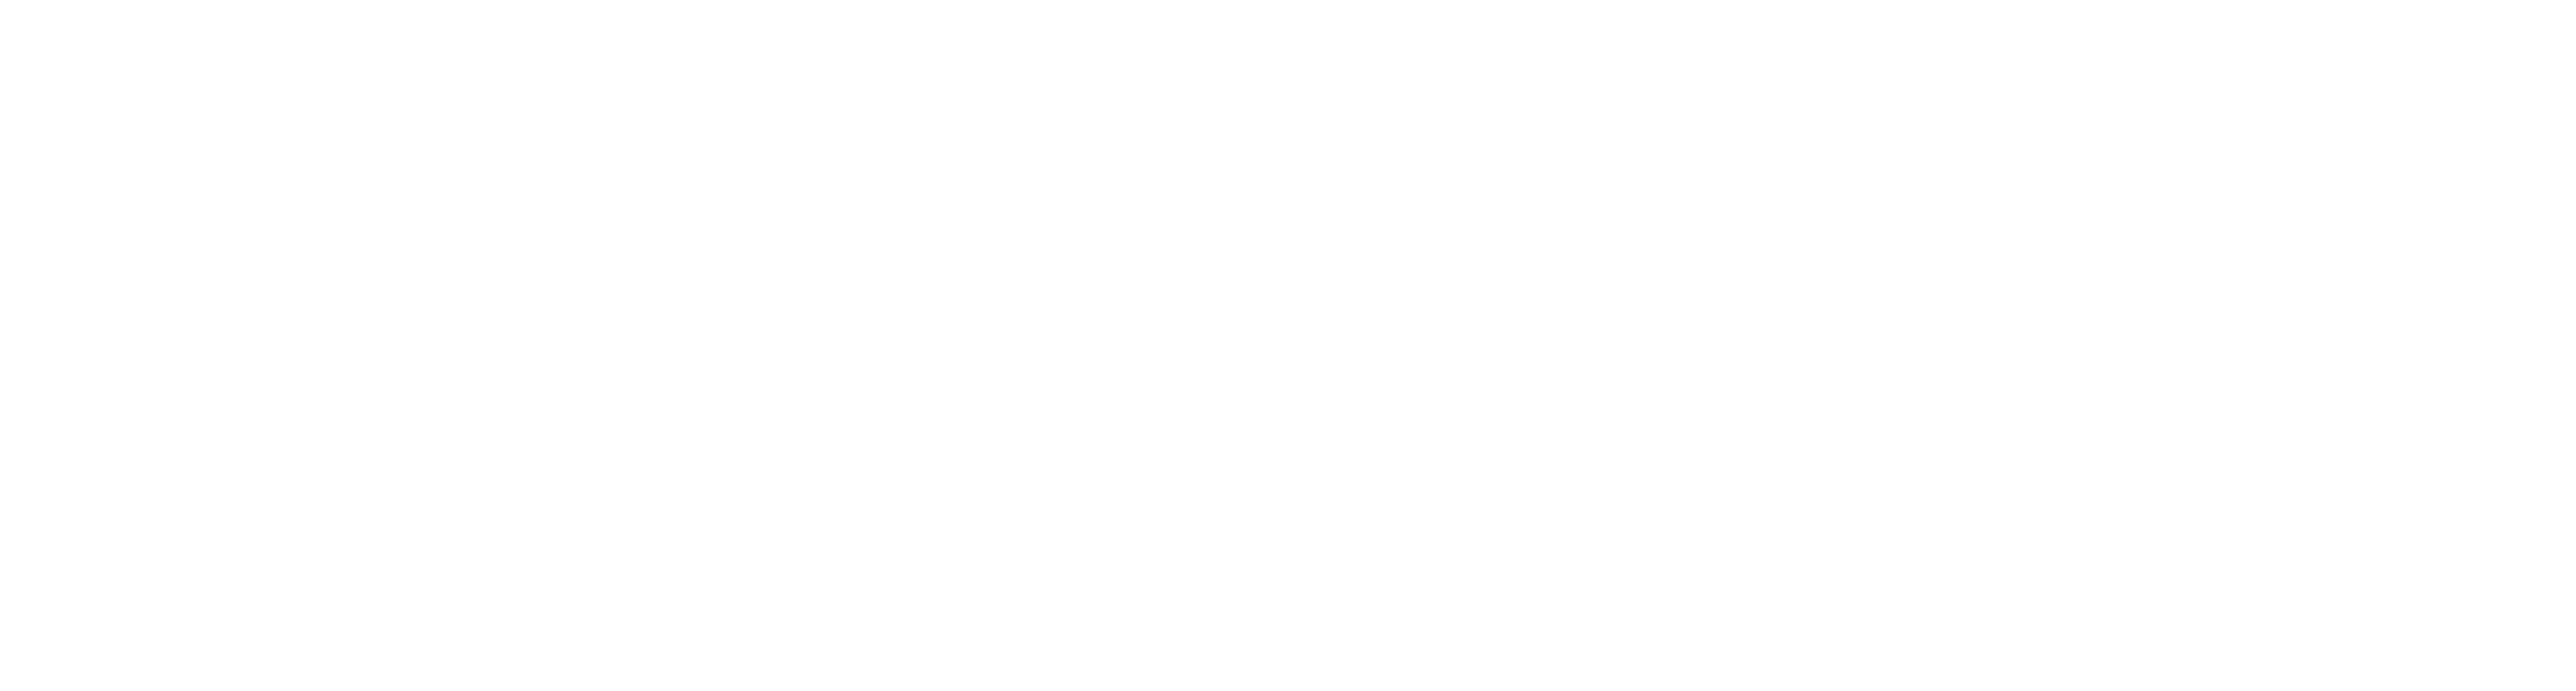 XBox Series S logo